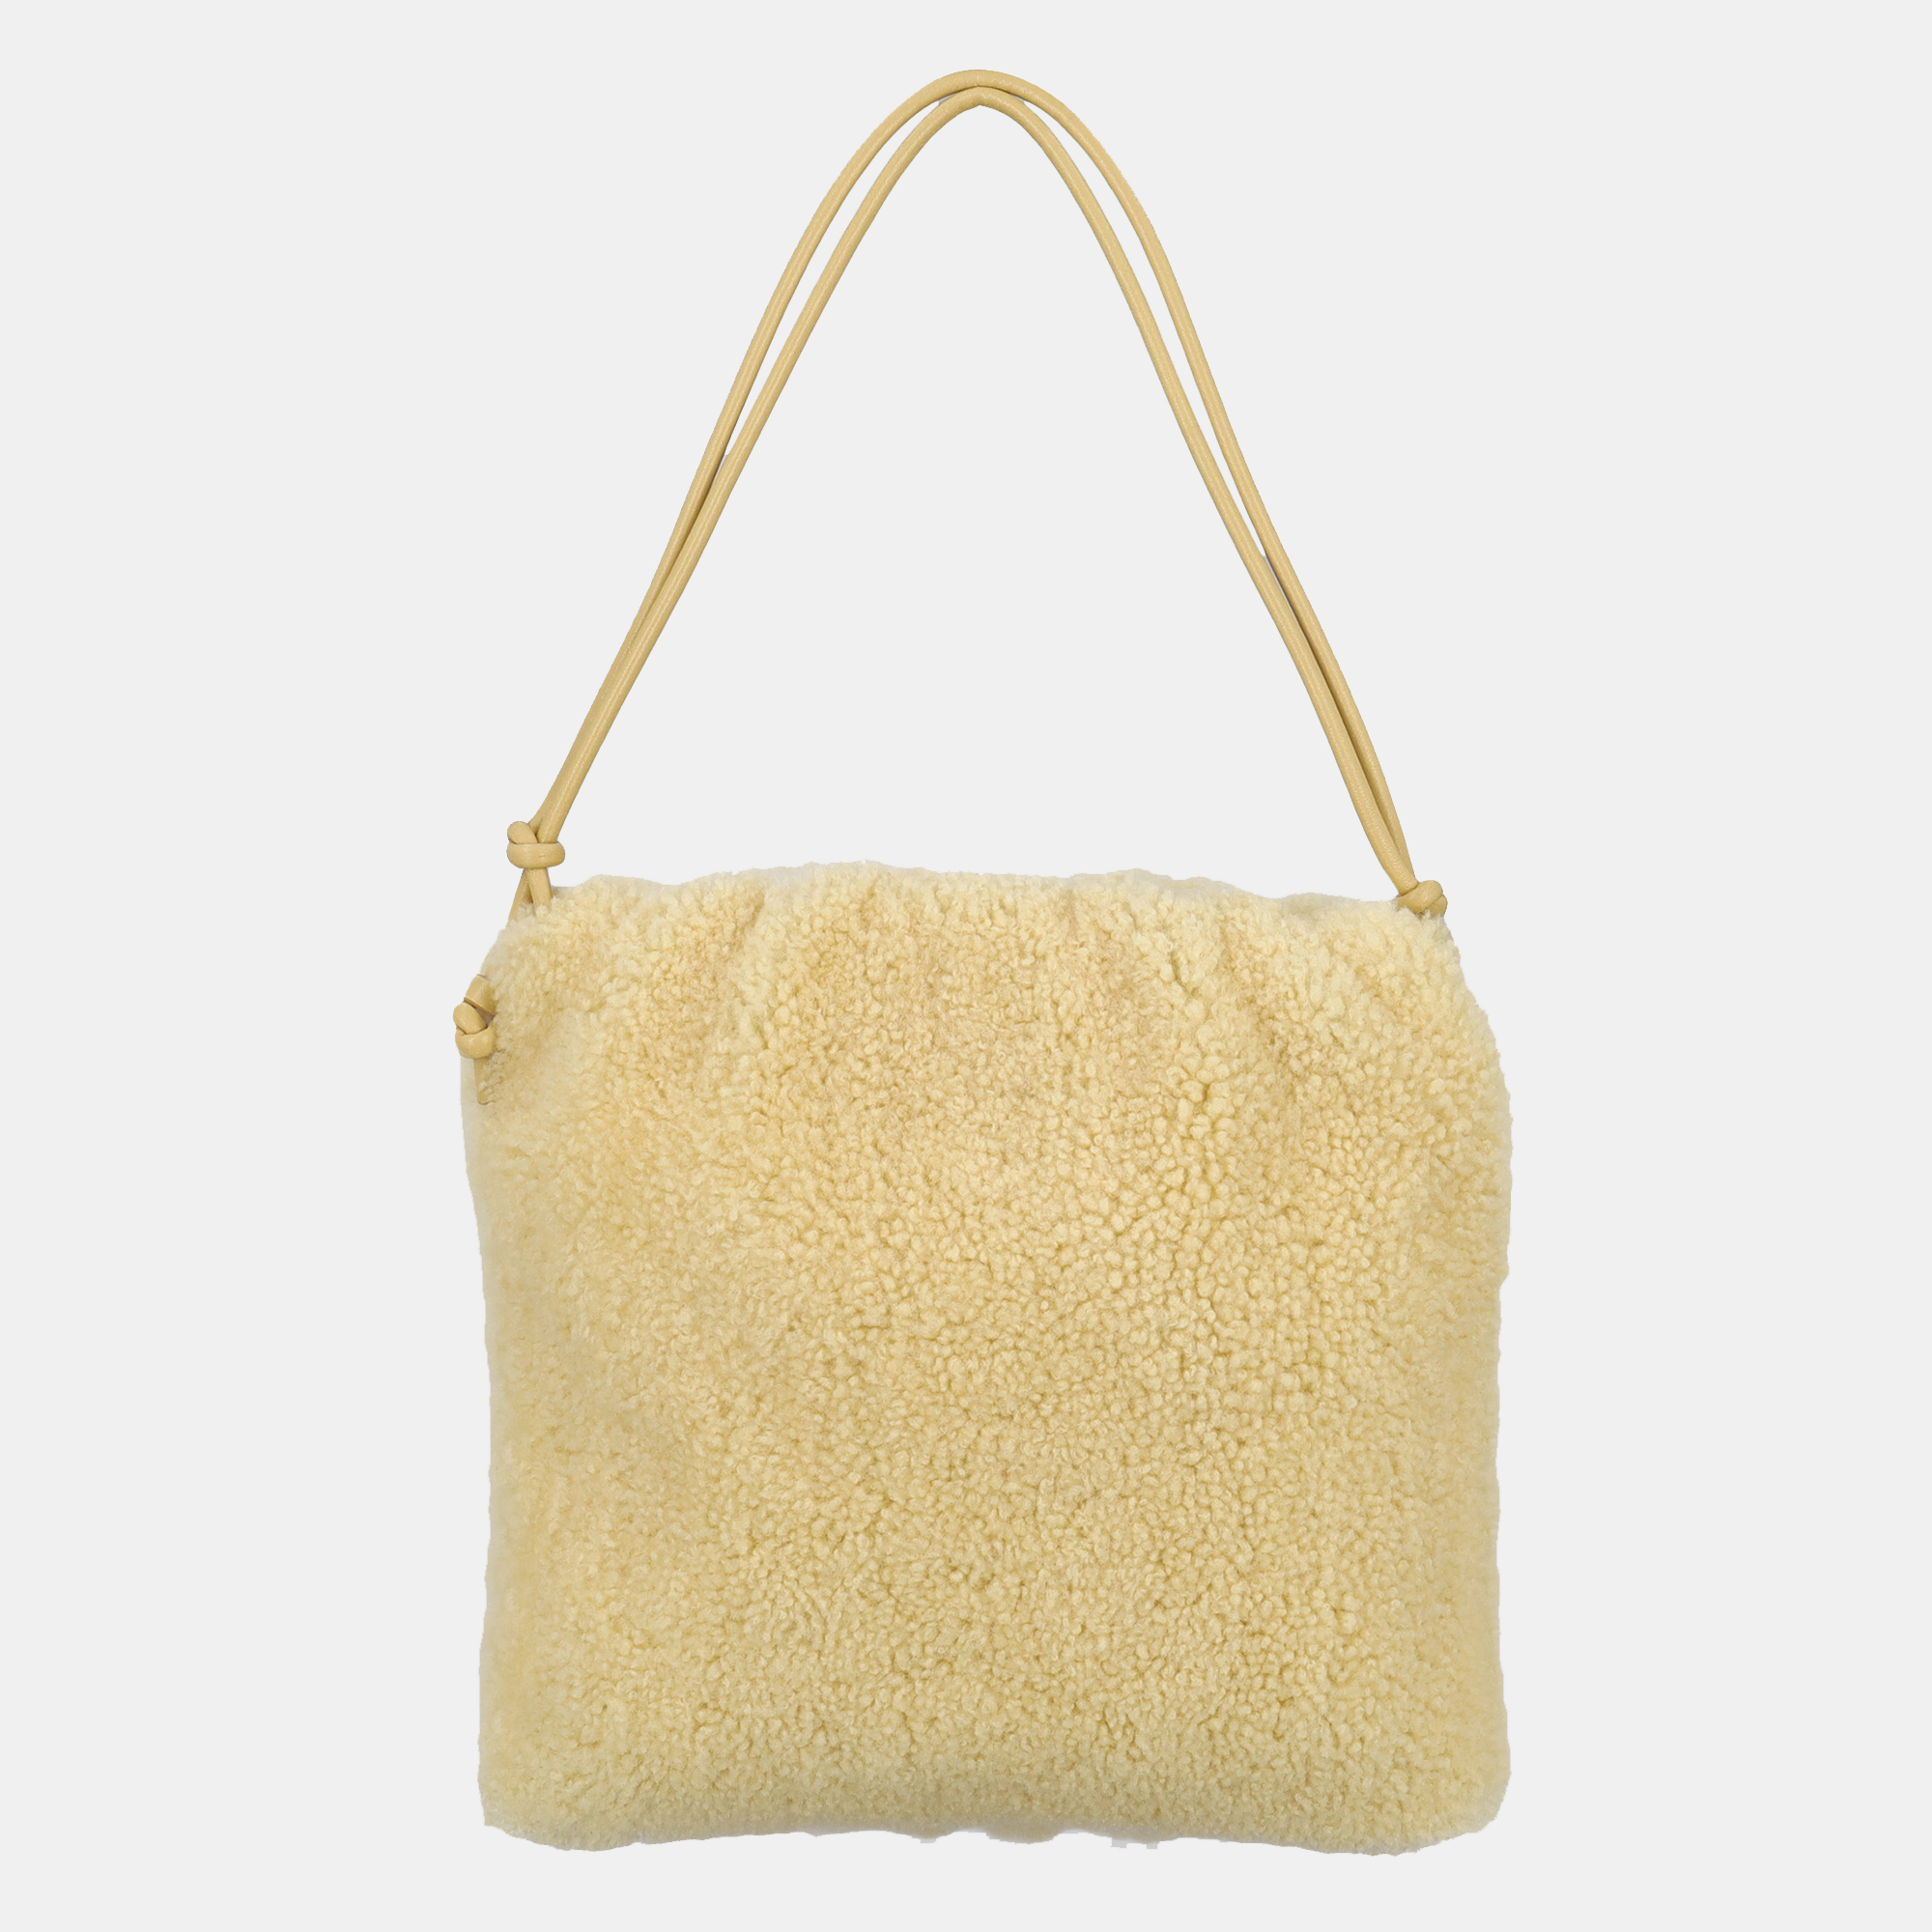 Bottega Veneta Women's Leather Shoulder Bag - Yellow - One Size